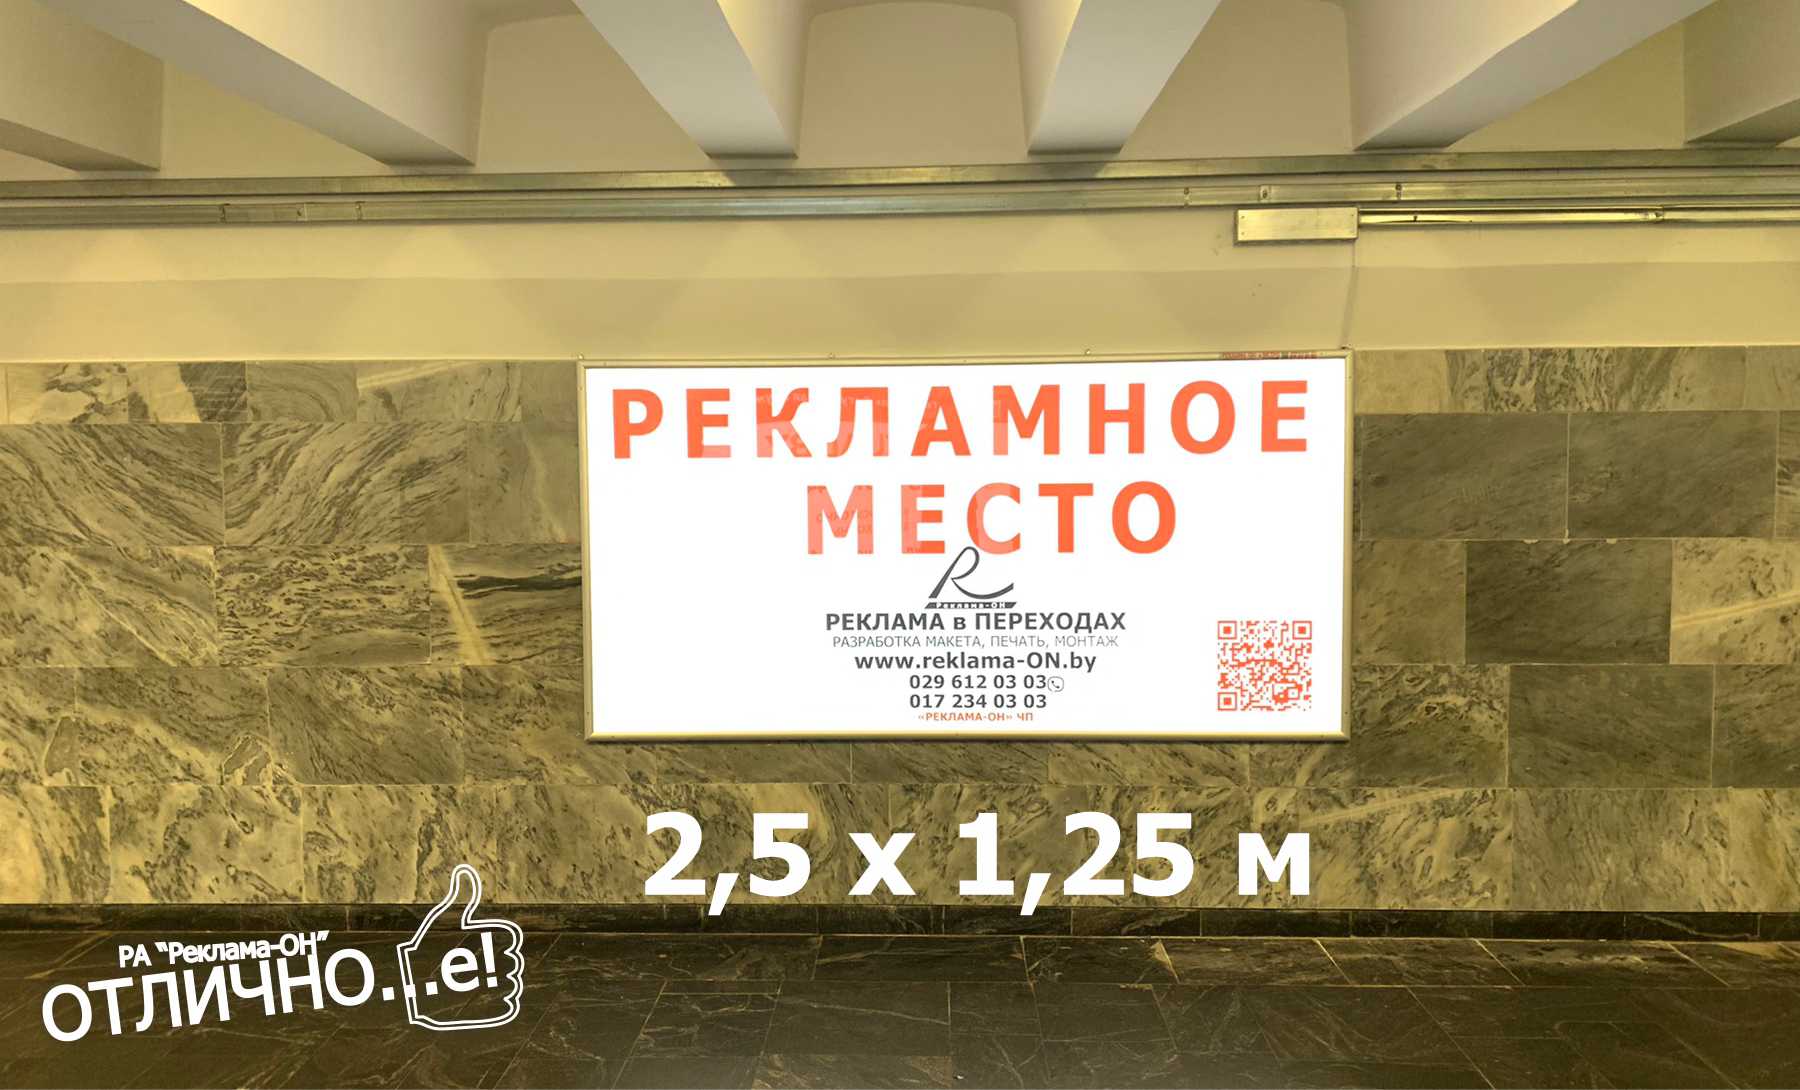 Ультраяркий световой лайтбокс на станции метро Фрунзенская (переход) reklama-on.by